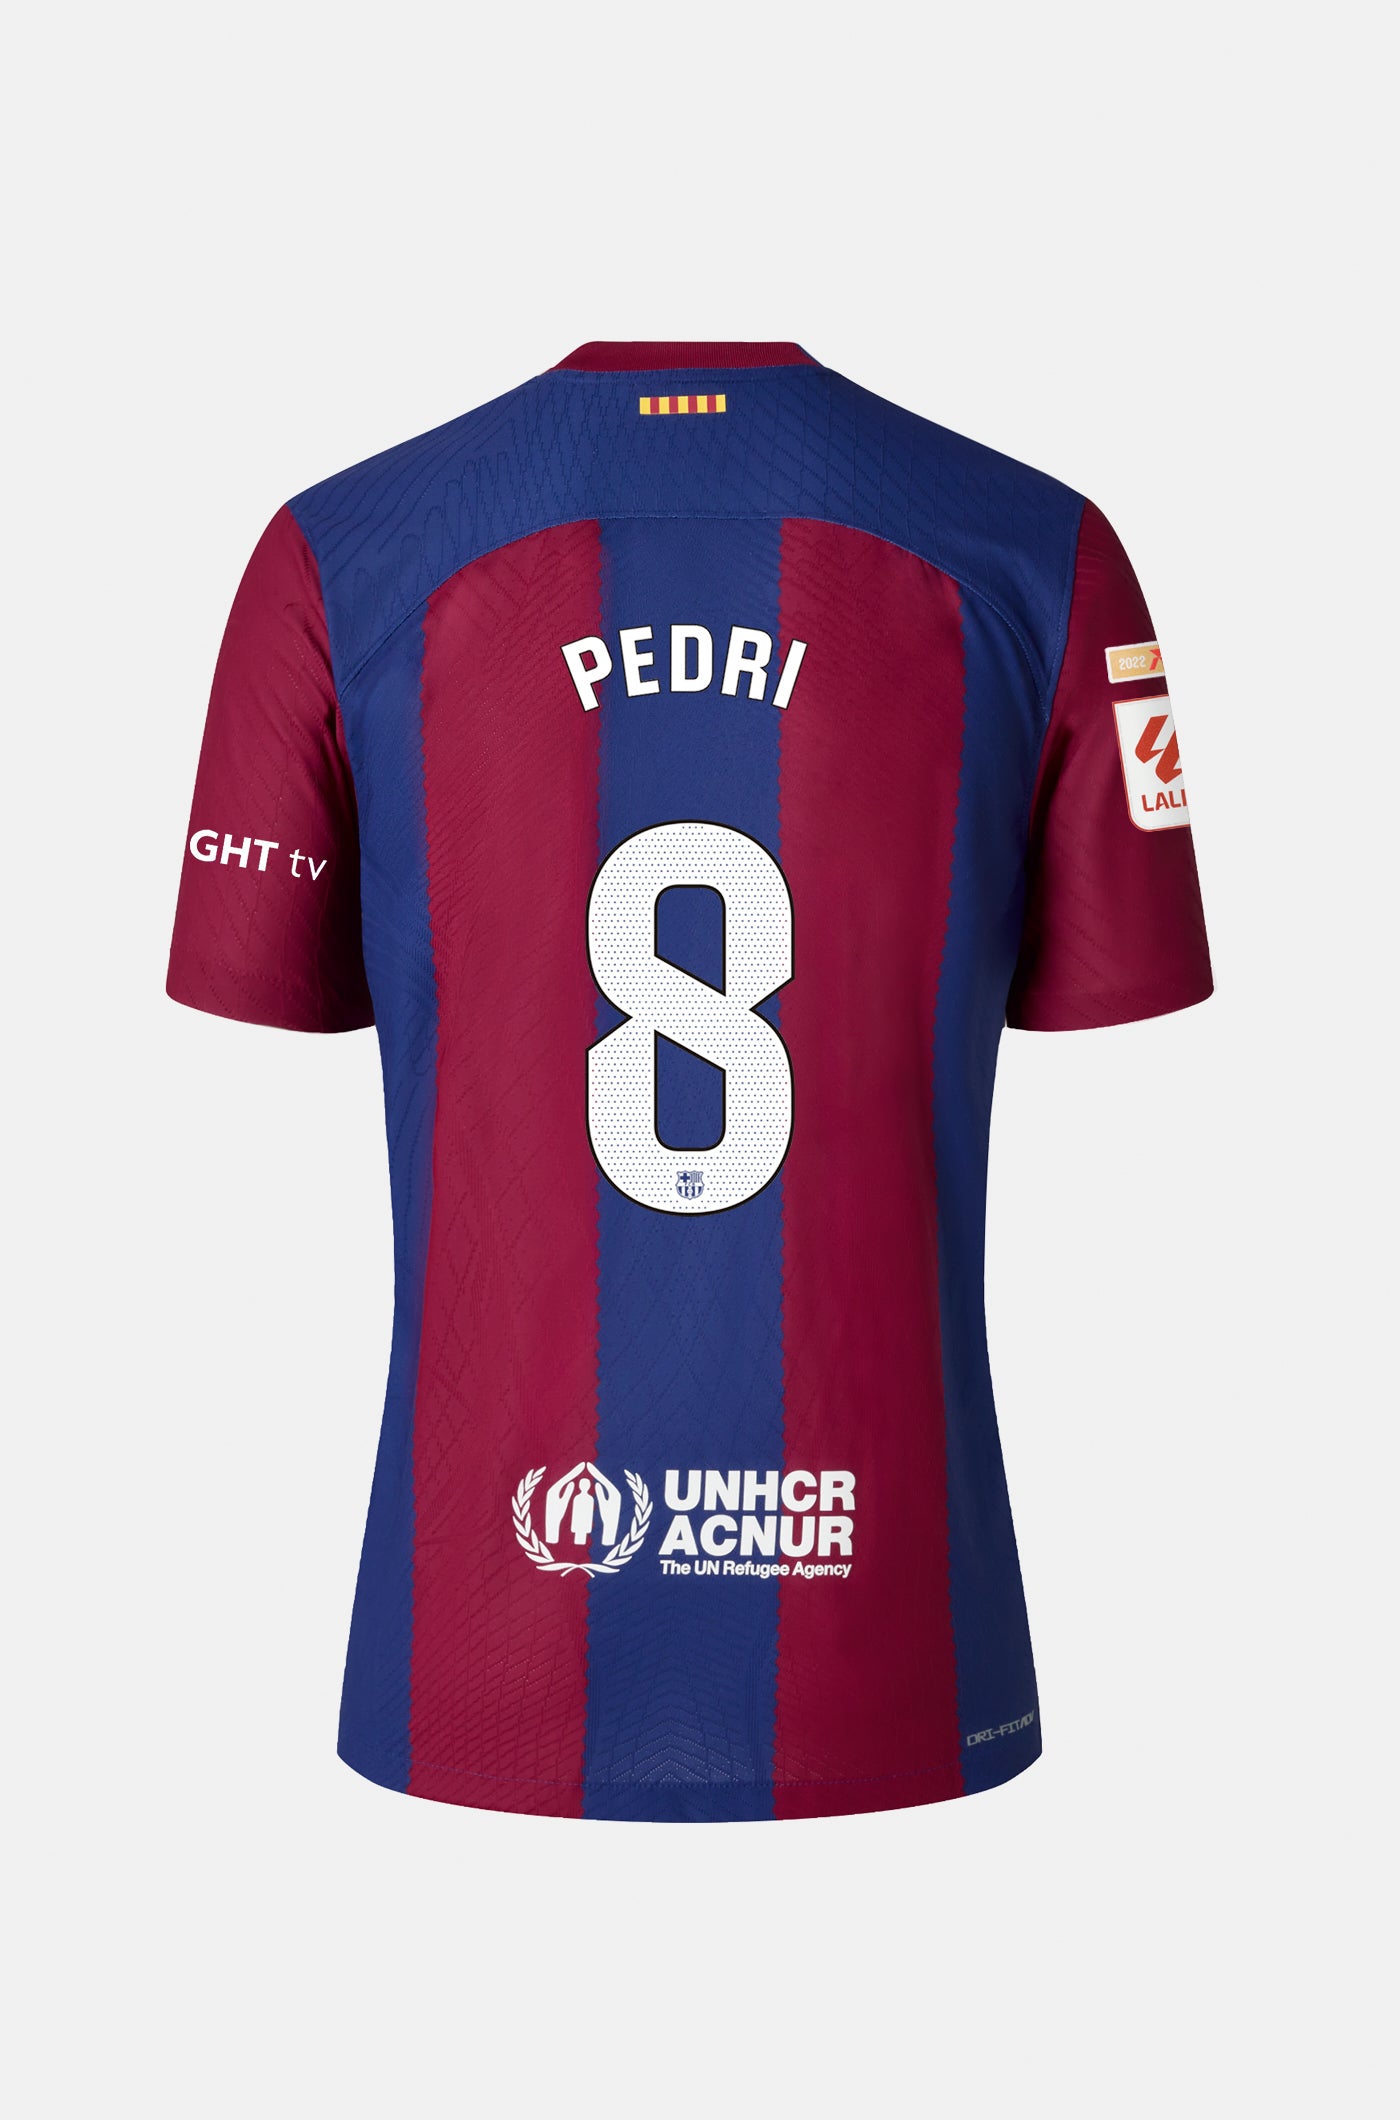 LFP FC Barcelona home shirt 23/24 Player's Edition - PEDRI